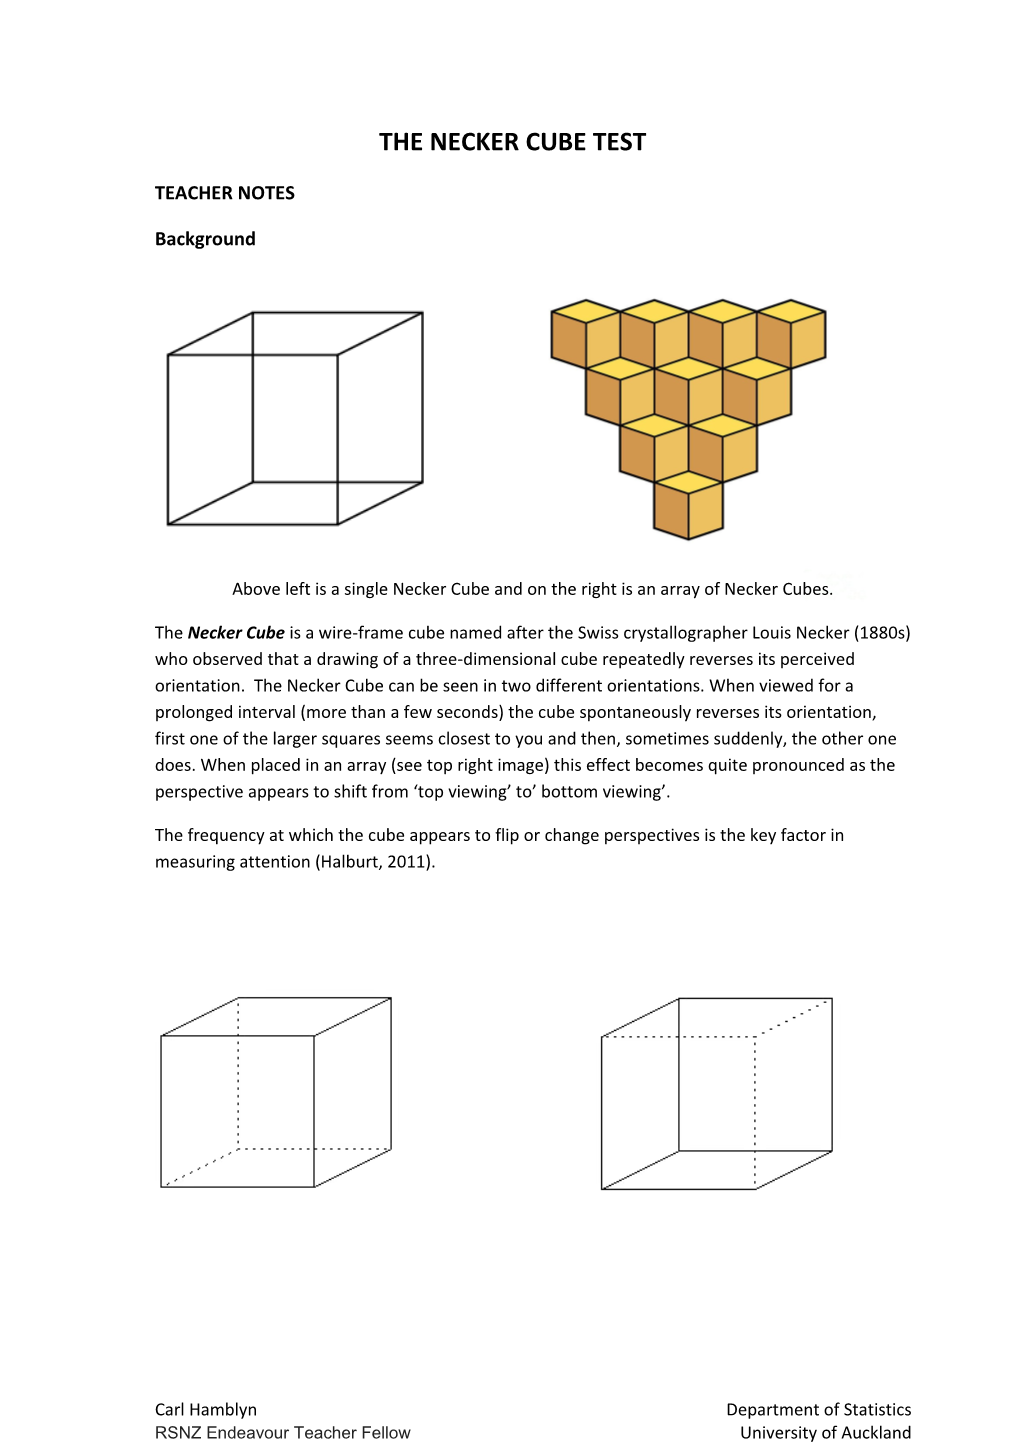 The Necker Cube Test